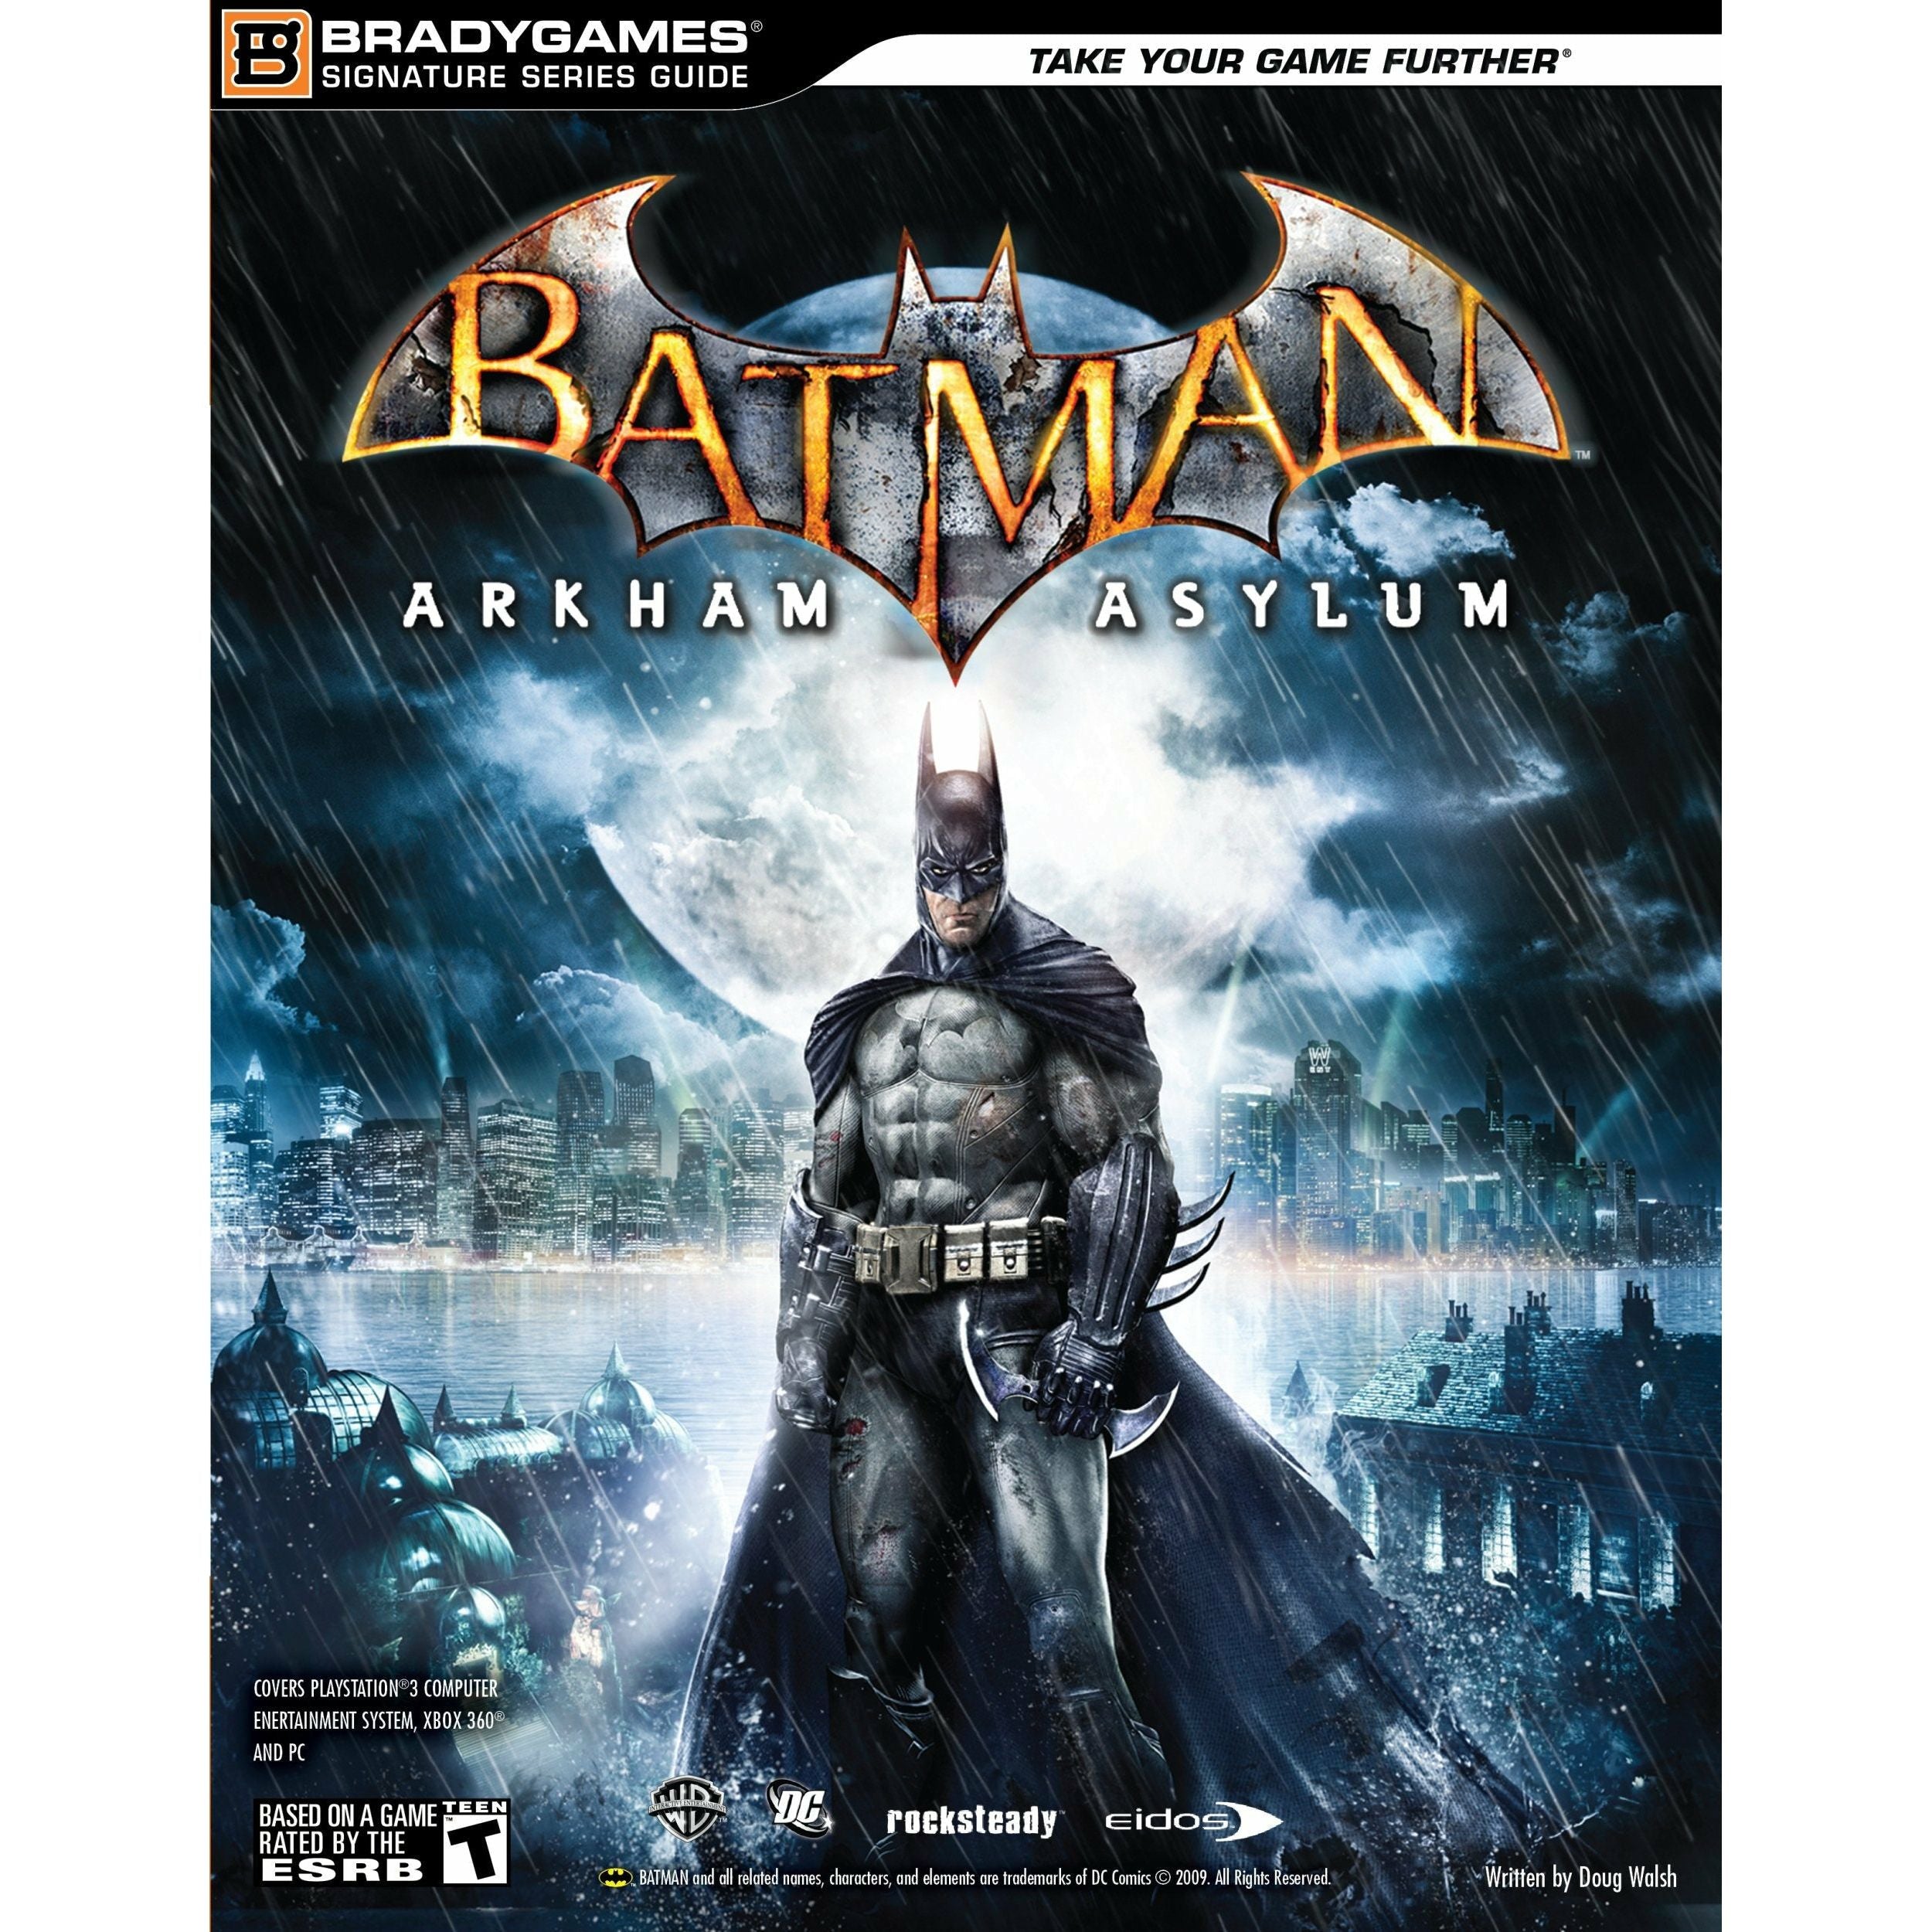 STRAT - Batman Arkham Asylum Official Strategy Guide - BradyGames